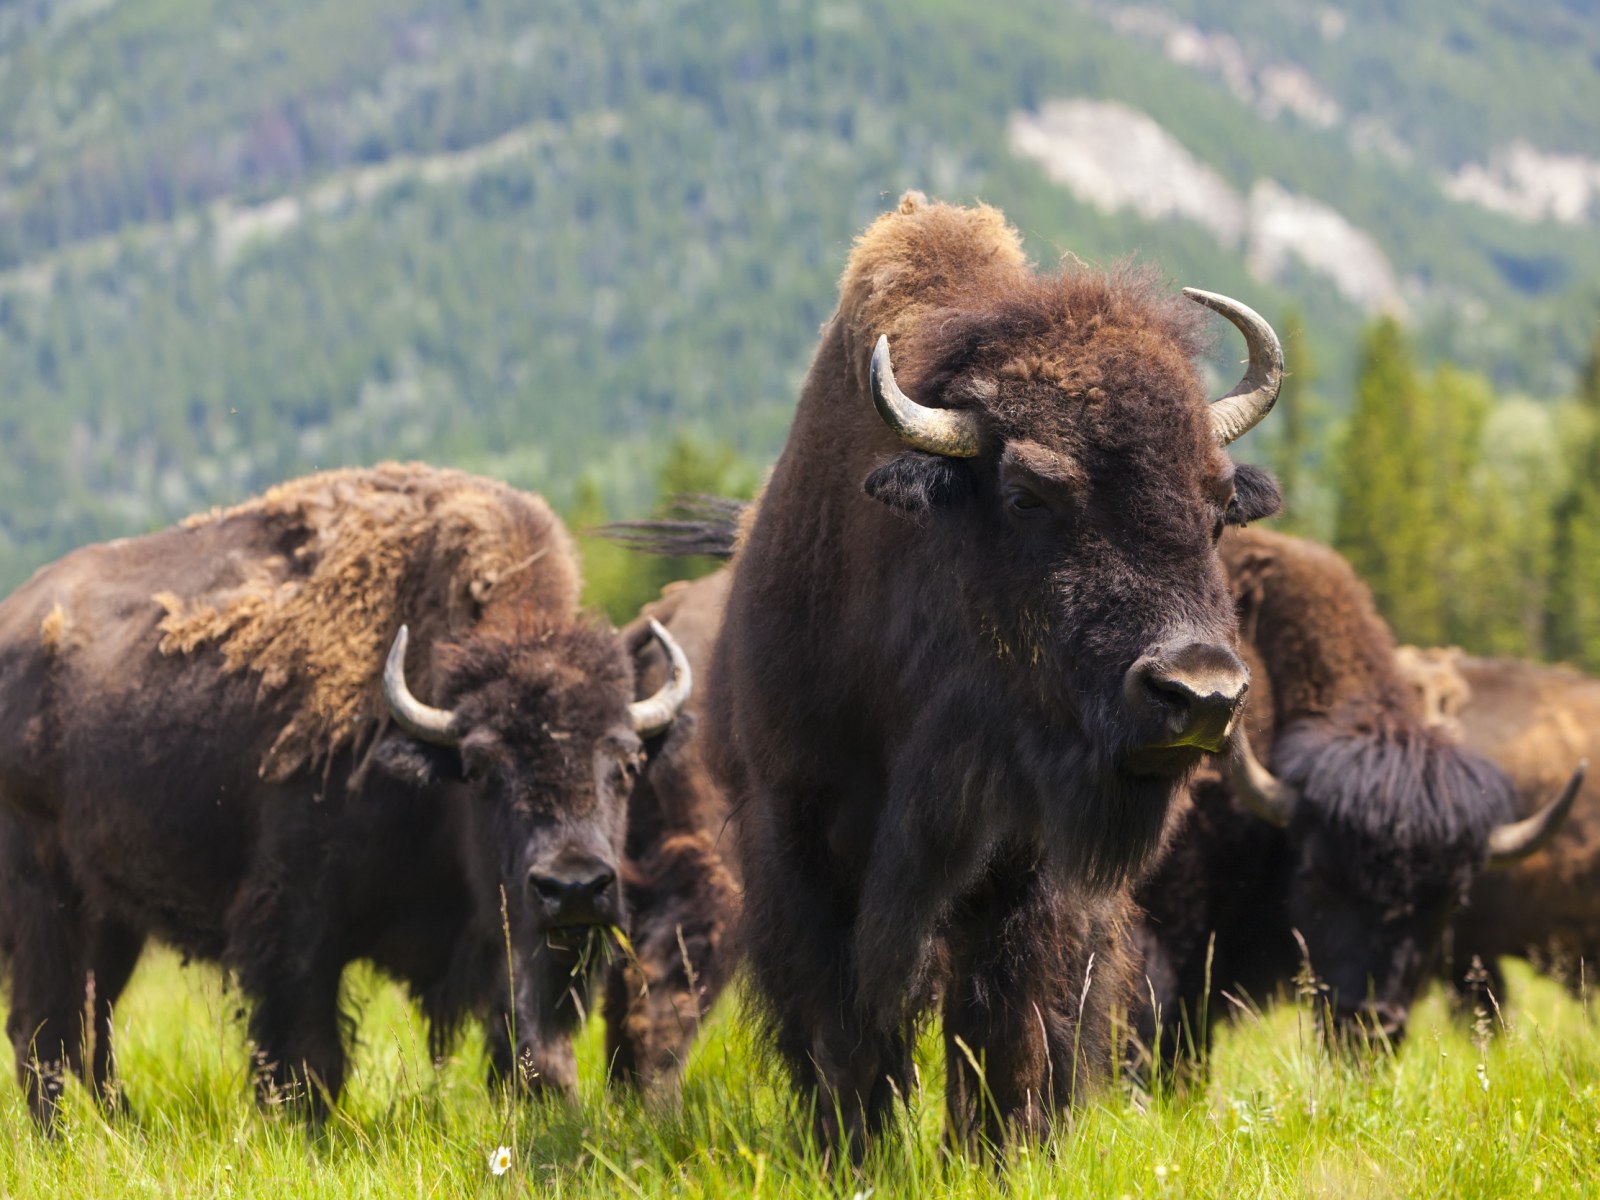 https://d.newsweek.com/en/full/2022891/bison-herd.jpg?w=1600&h=1200&q=88&f=13d1fdbb63231e86ddb05a2ac5fd09f2